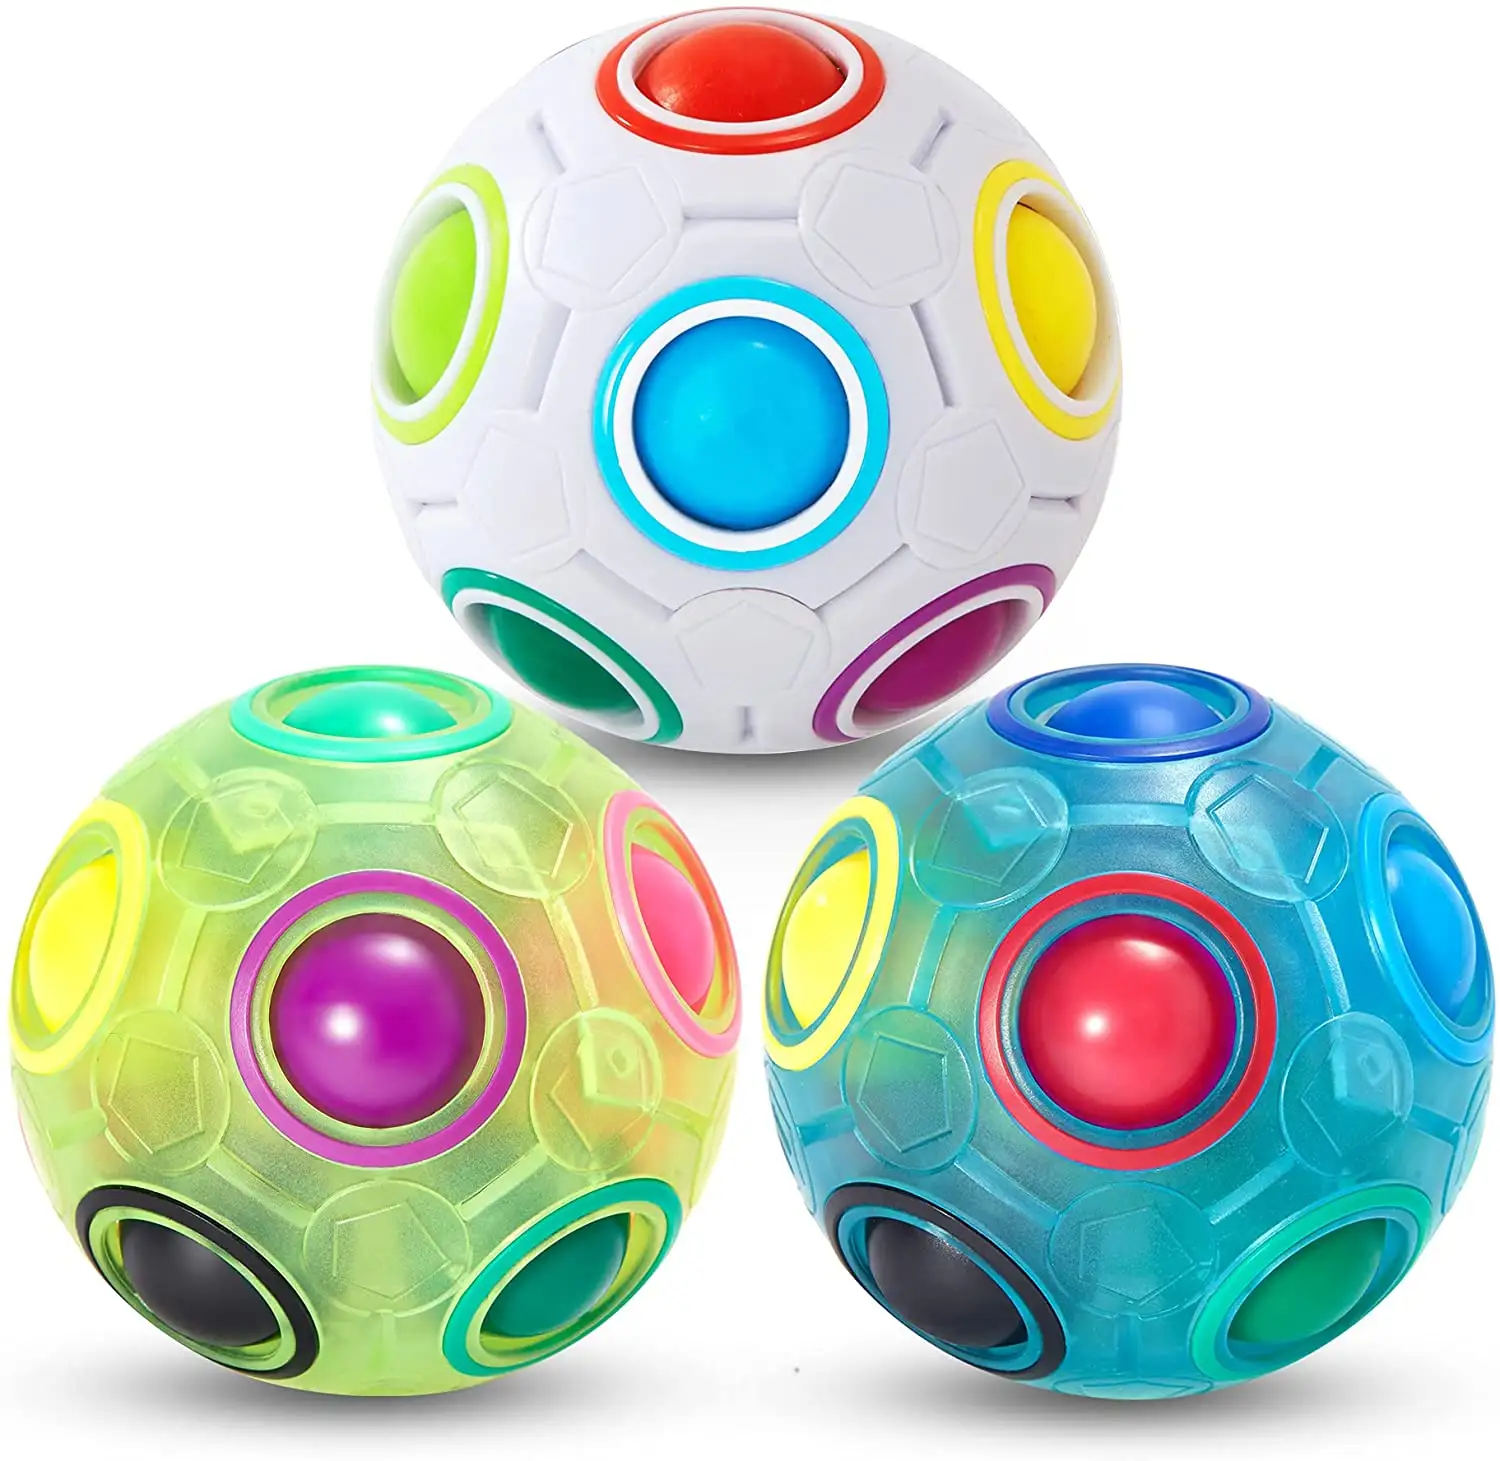 Magic Rainbow Puzzle Ball, Fidget Ball Puzzle Game Fun Stress Reliever Magic Ball Brain Teaser Fidget Toys for Children